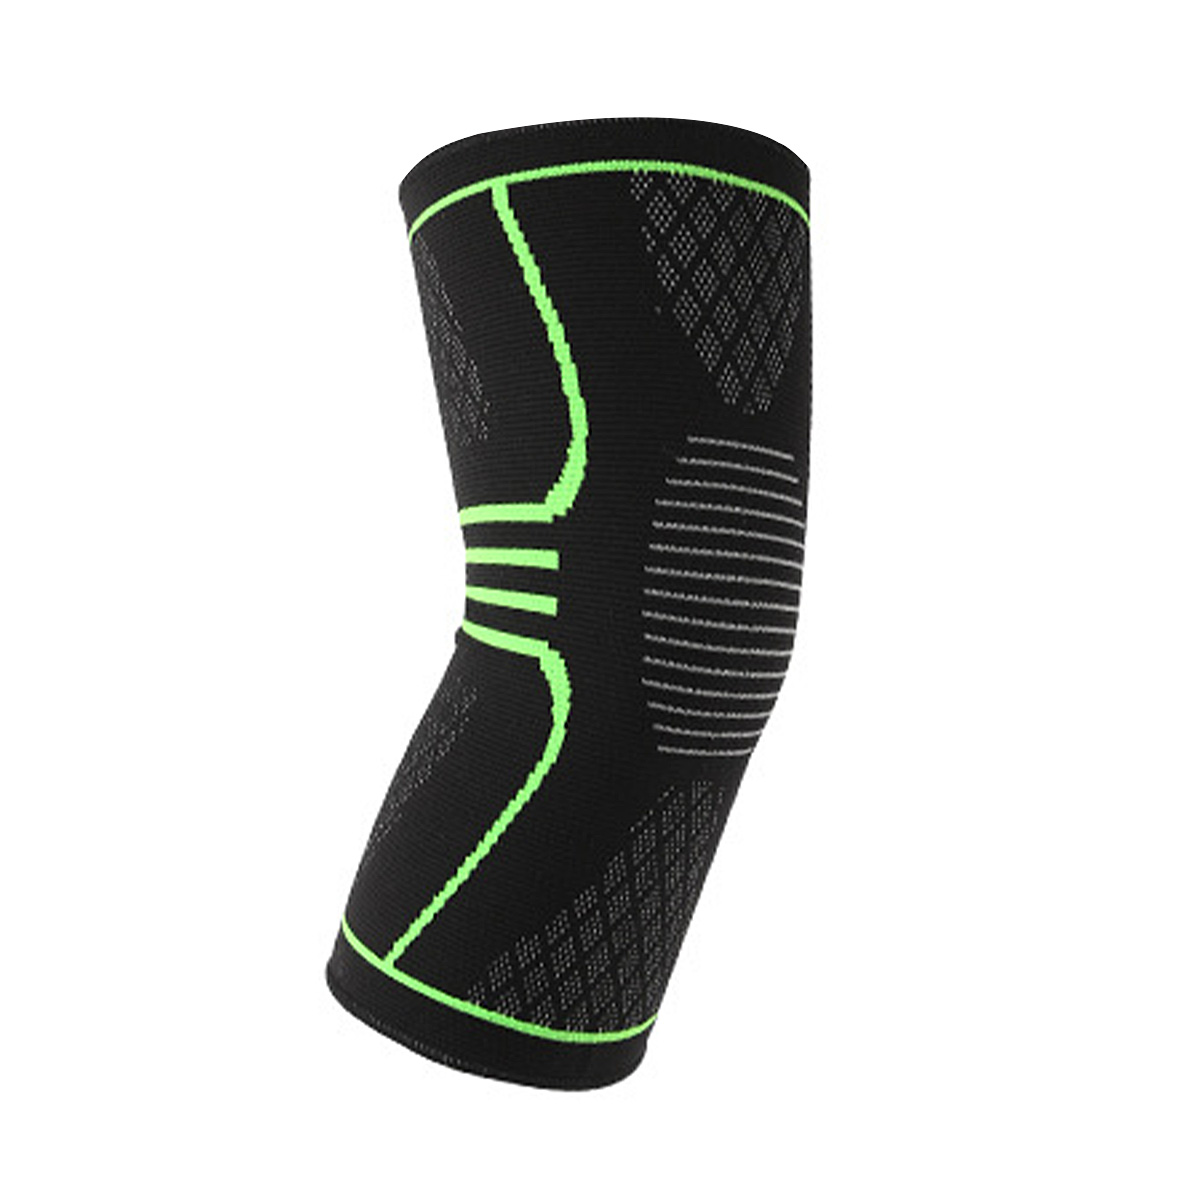 Customized Nylon Sport Protective Knee Support Brace